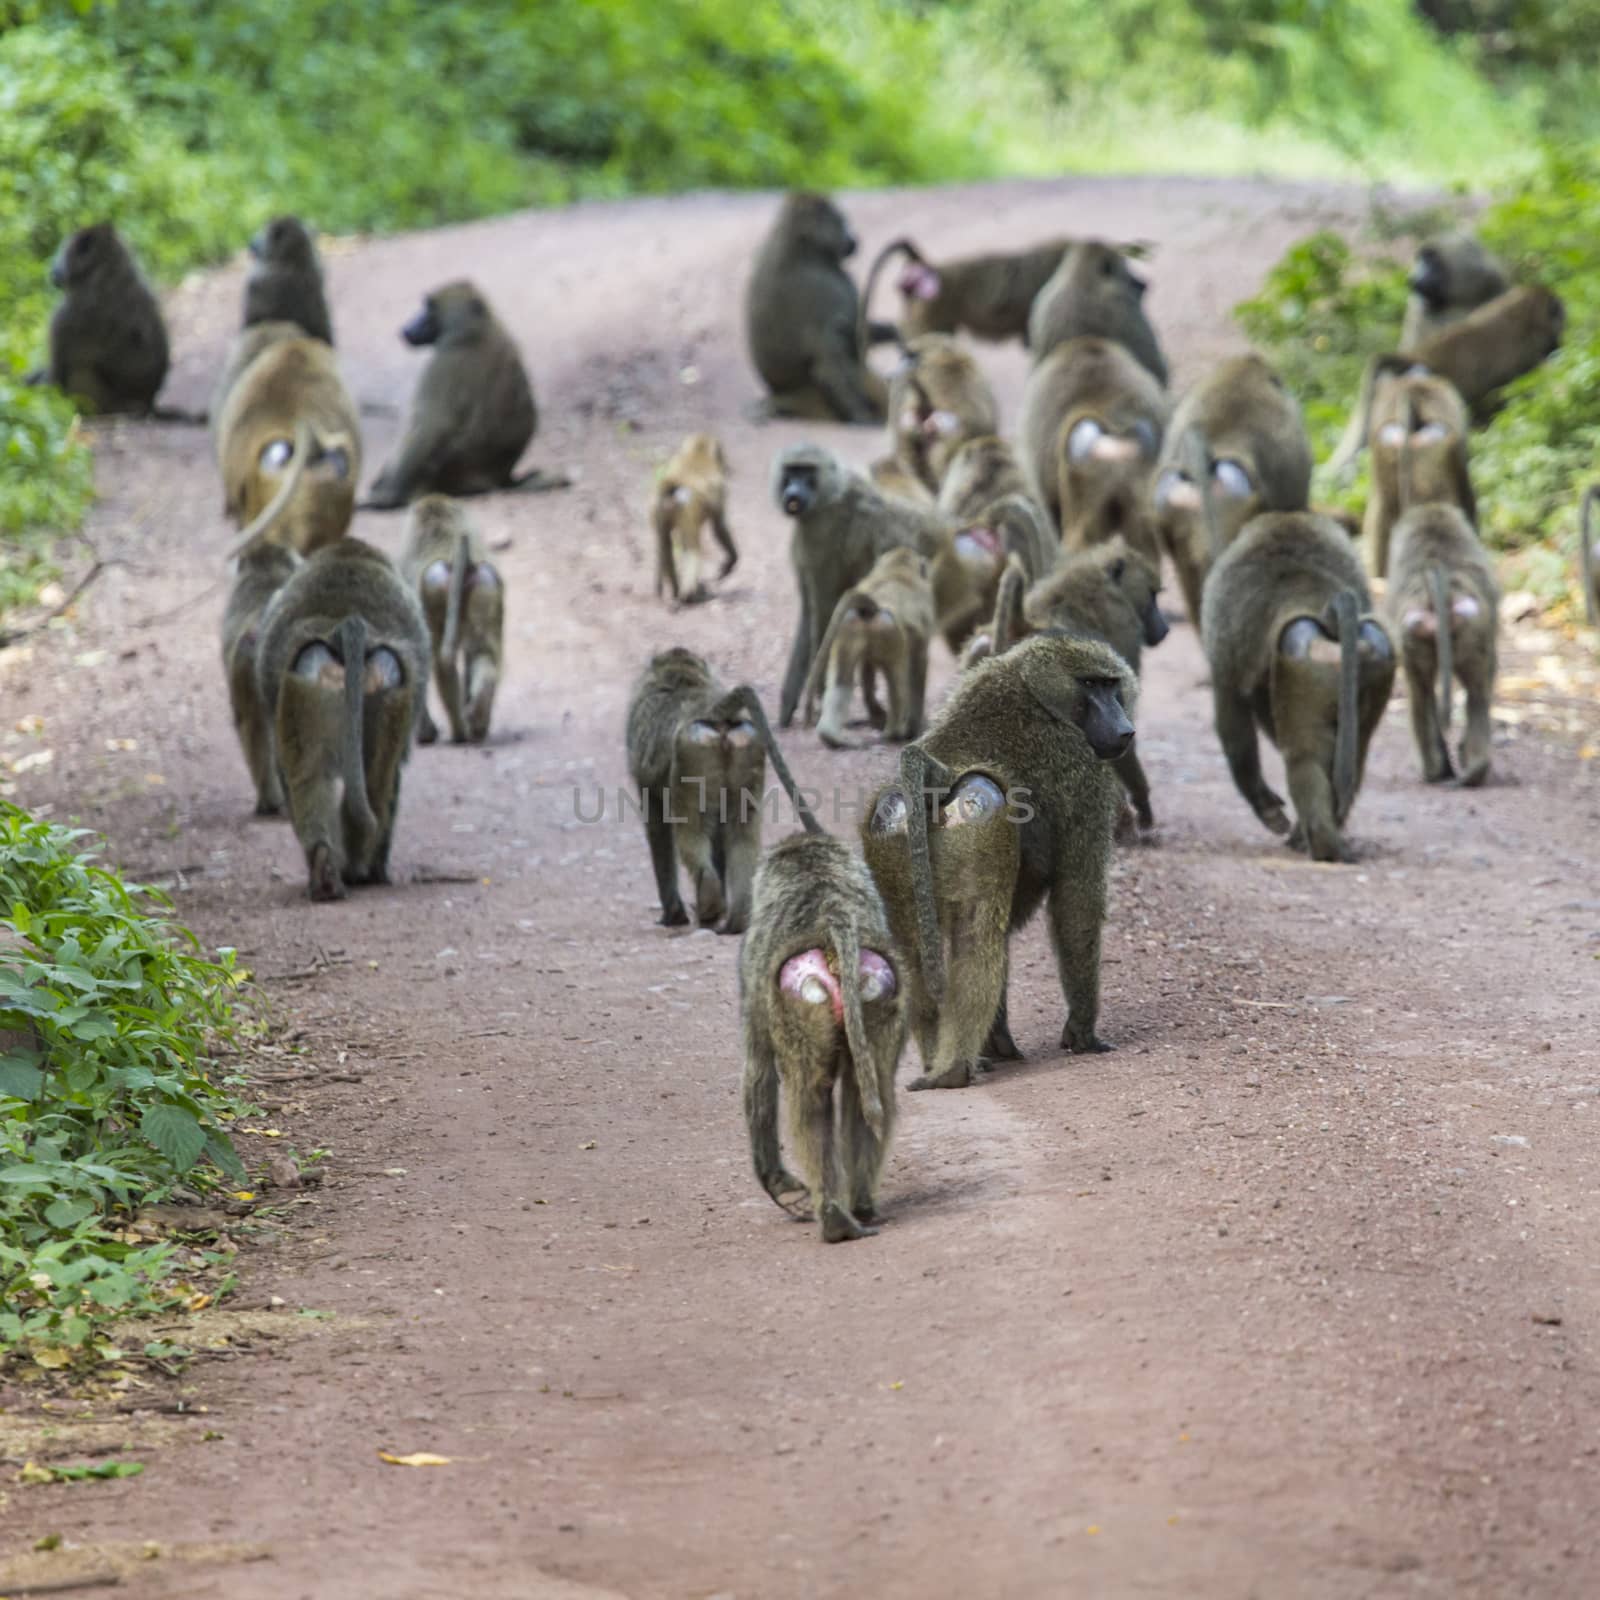 Group of Baboon monkeys in African bush. Lake Manyara National Park in Tanzania